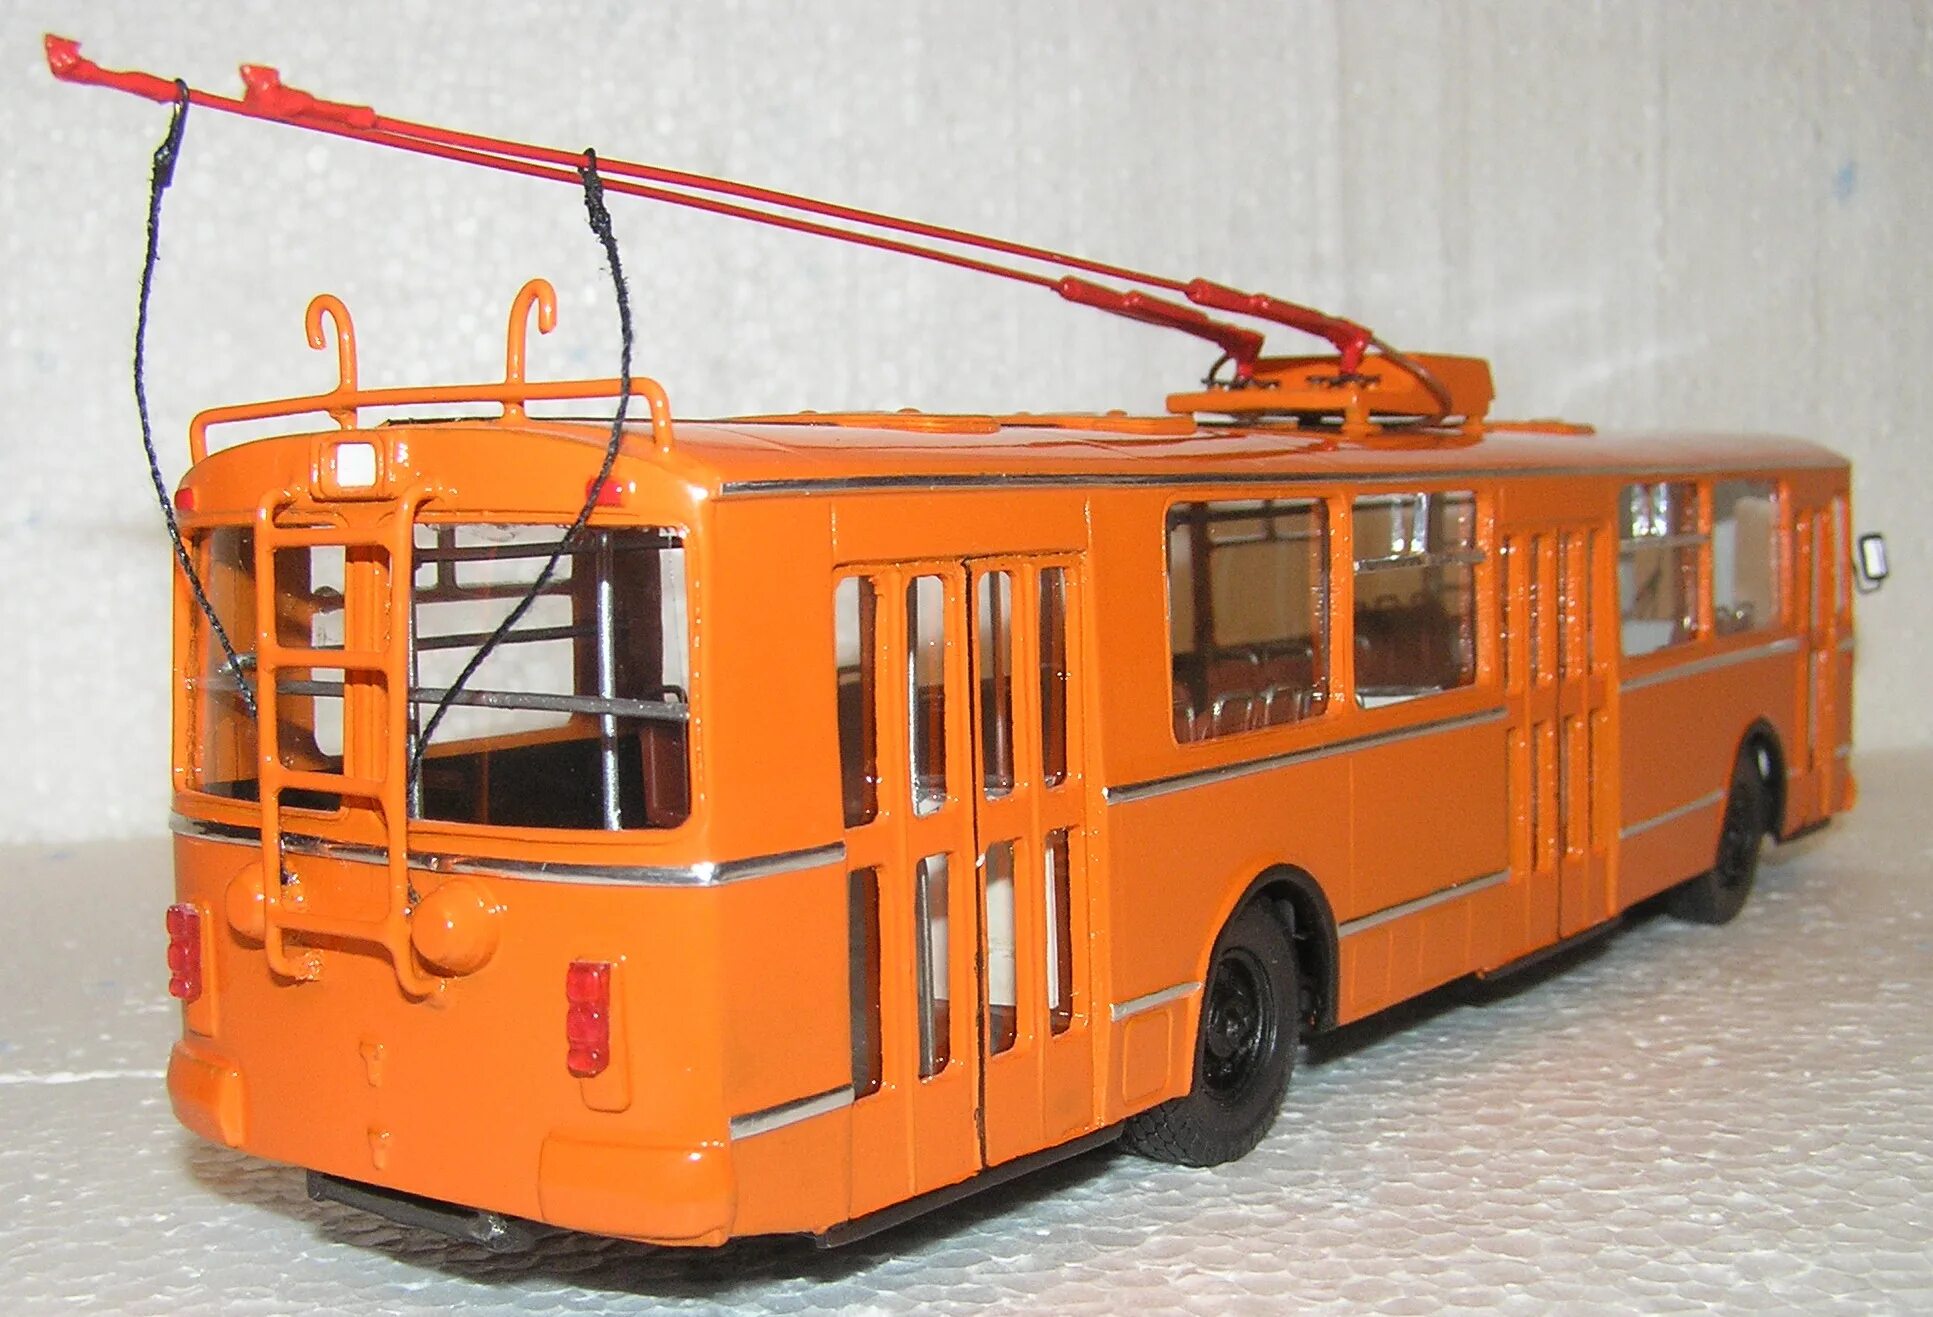 ЗИУ 682 1 43. ЗИУ 682 модель 1 43. ЗИУ 5 троллейбус модель 1/43. Троллейбус ЗИУ 682 модель 1 43.